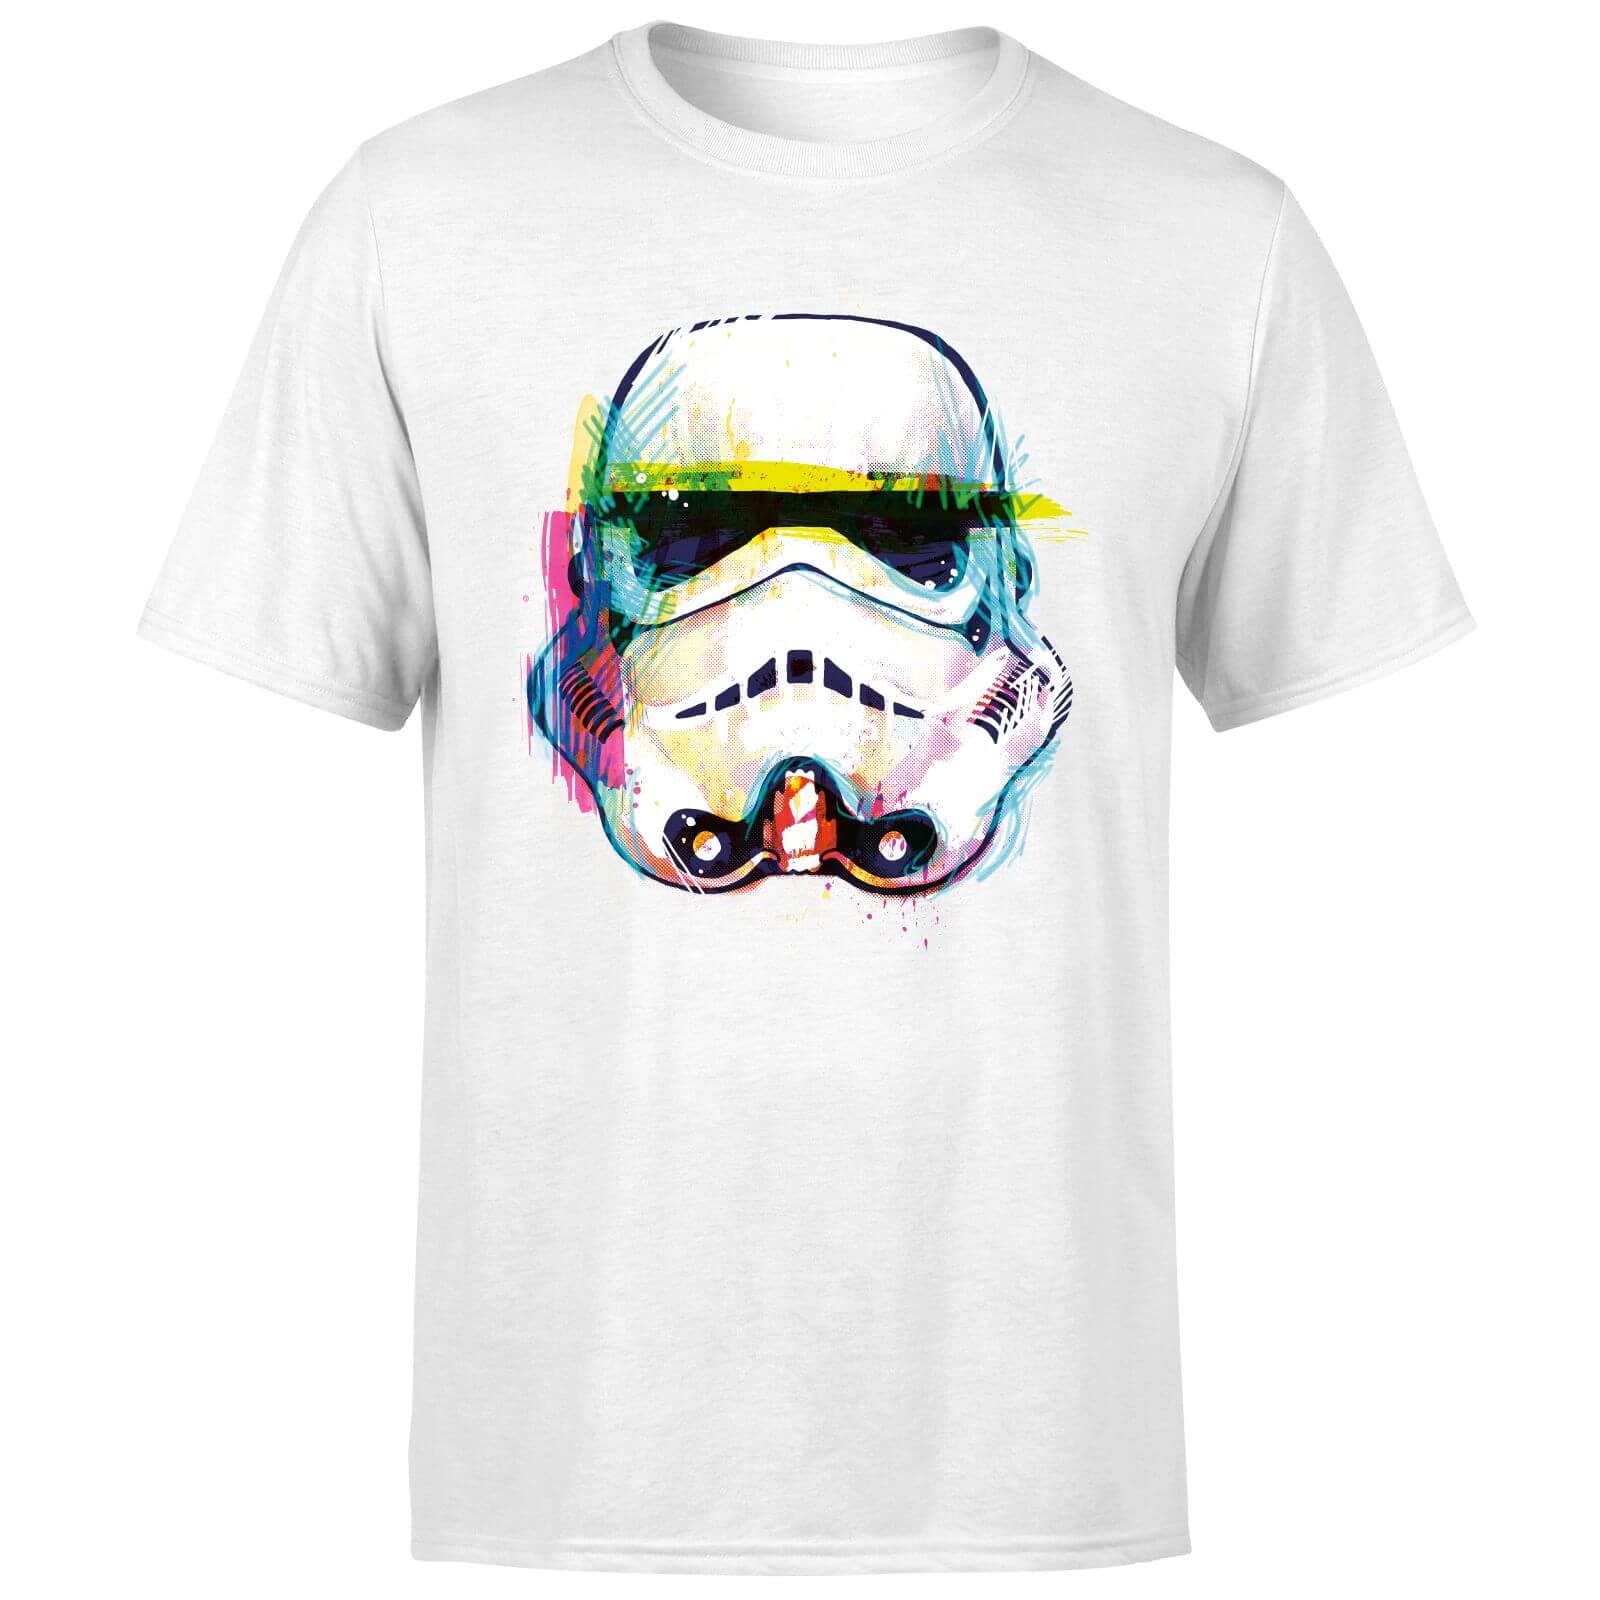 star wars stormtrooper t shirt